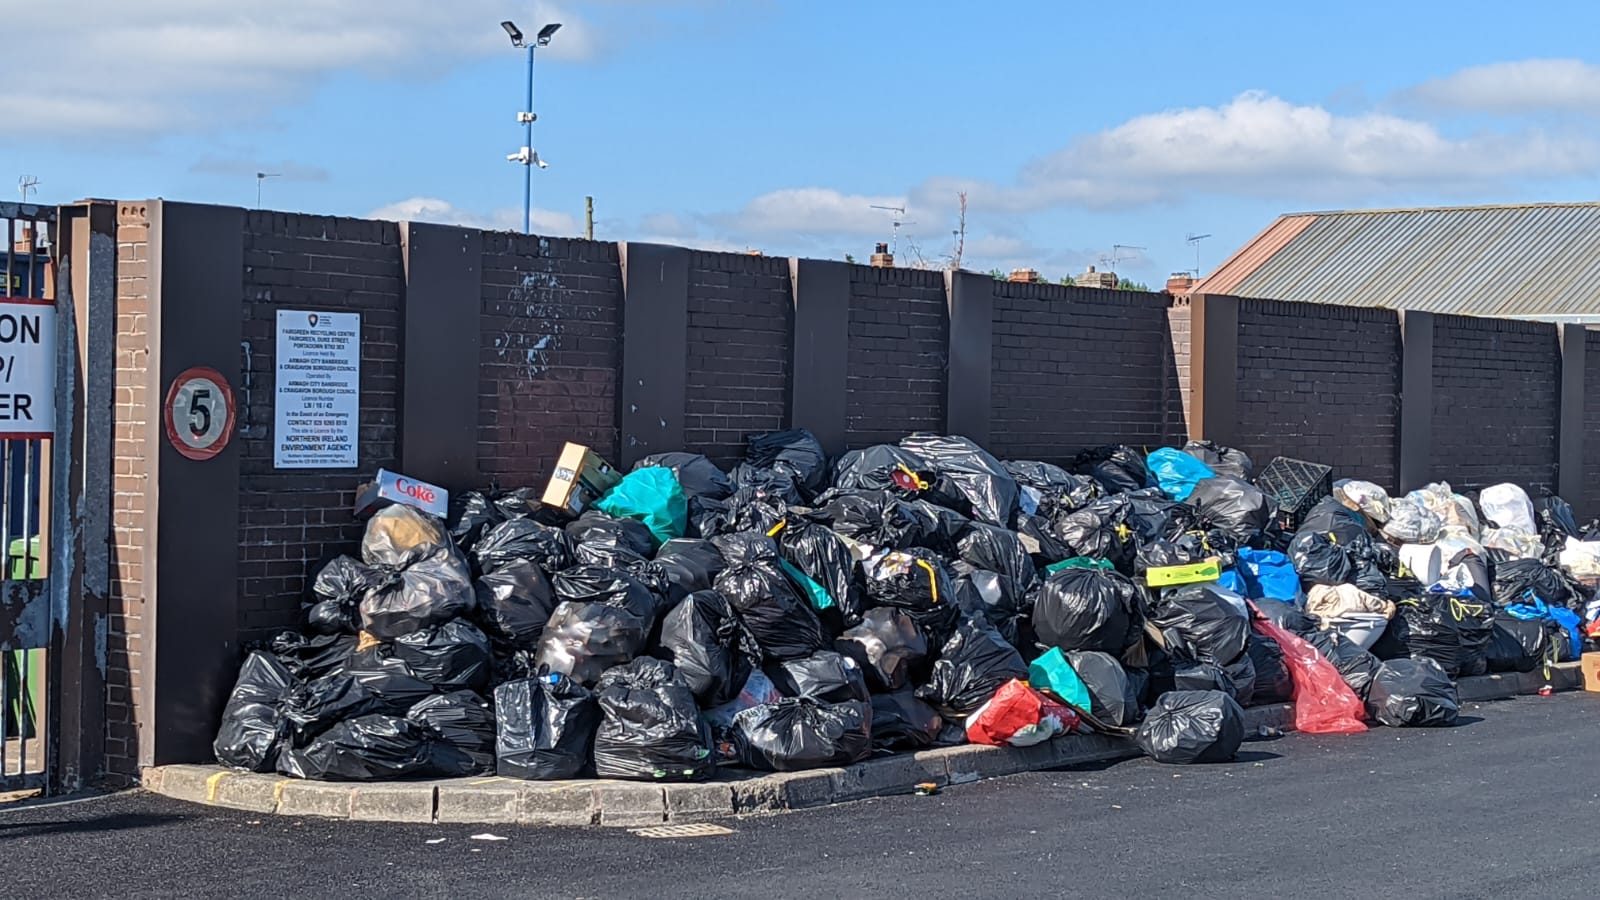 Portadown Recycling Centre rubbish bins strike